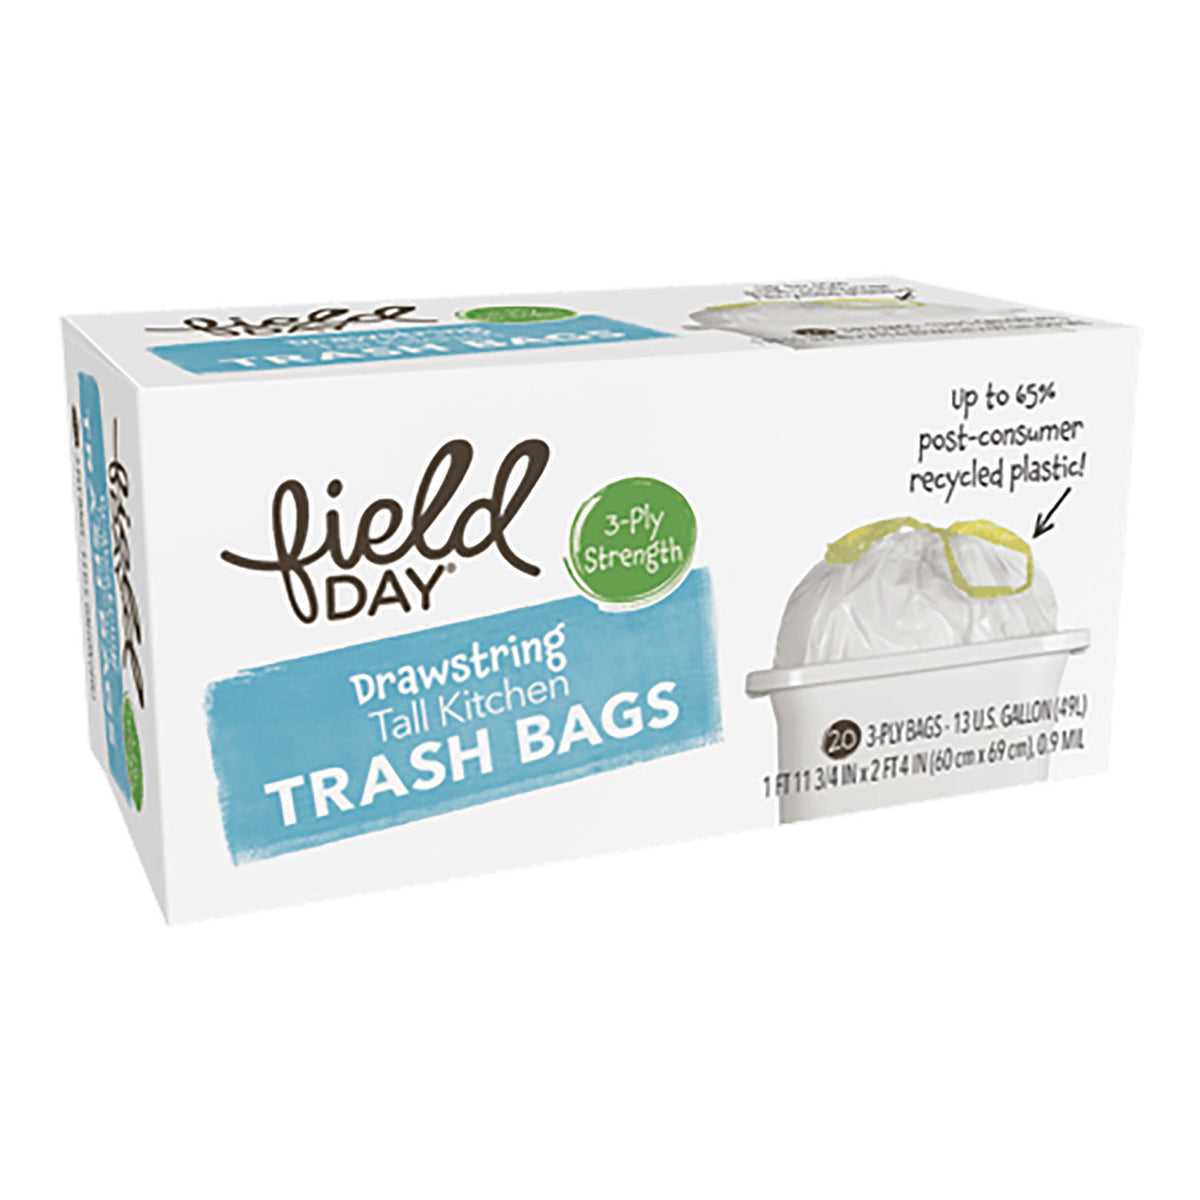 GreenPolly 13 Gallon Kitchen Trash Bags - 20ct